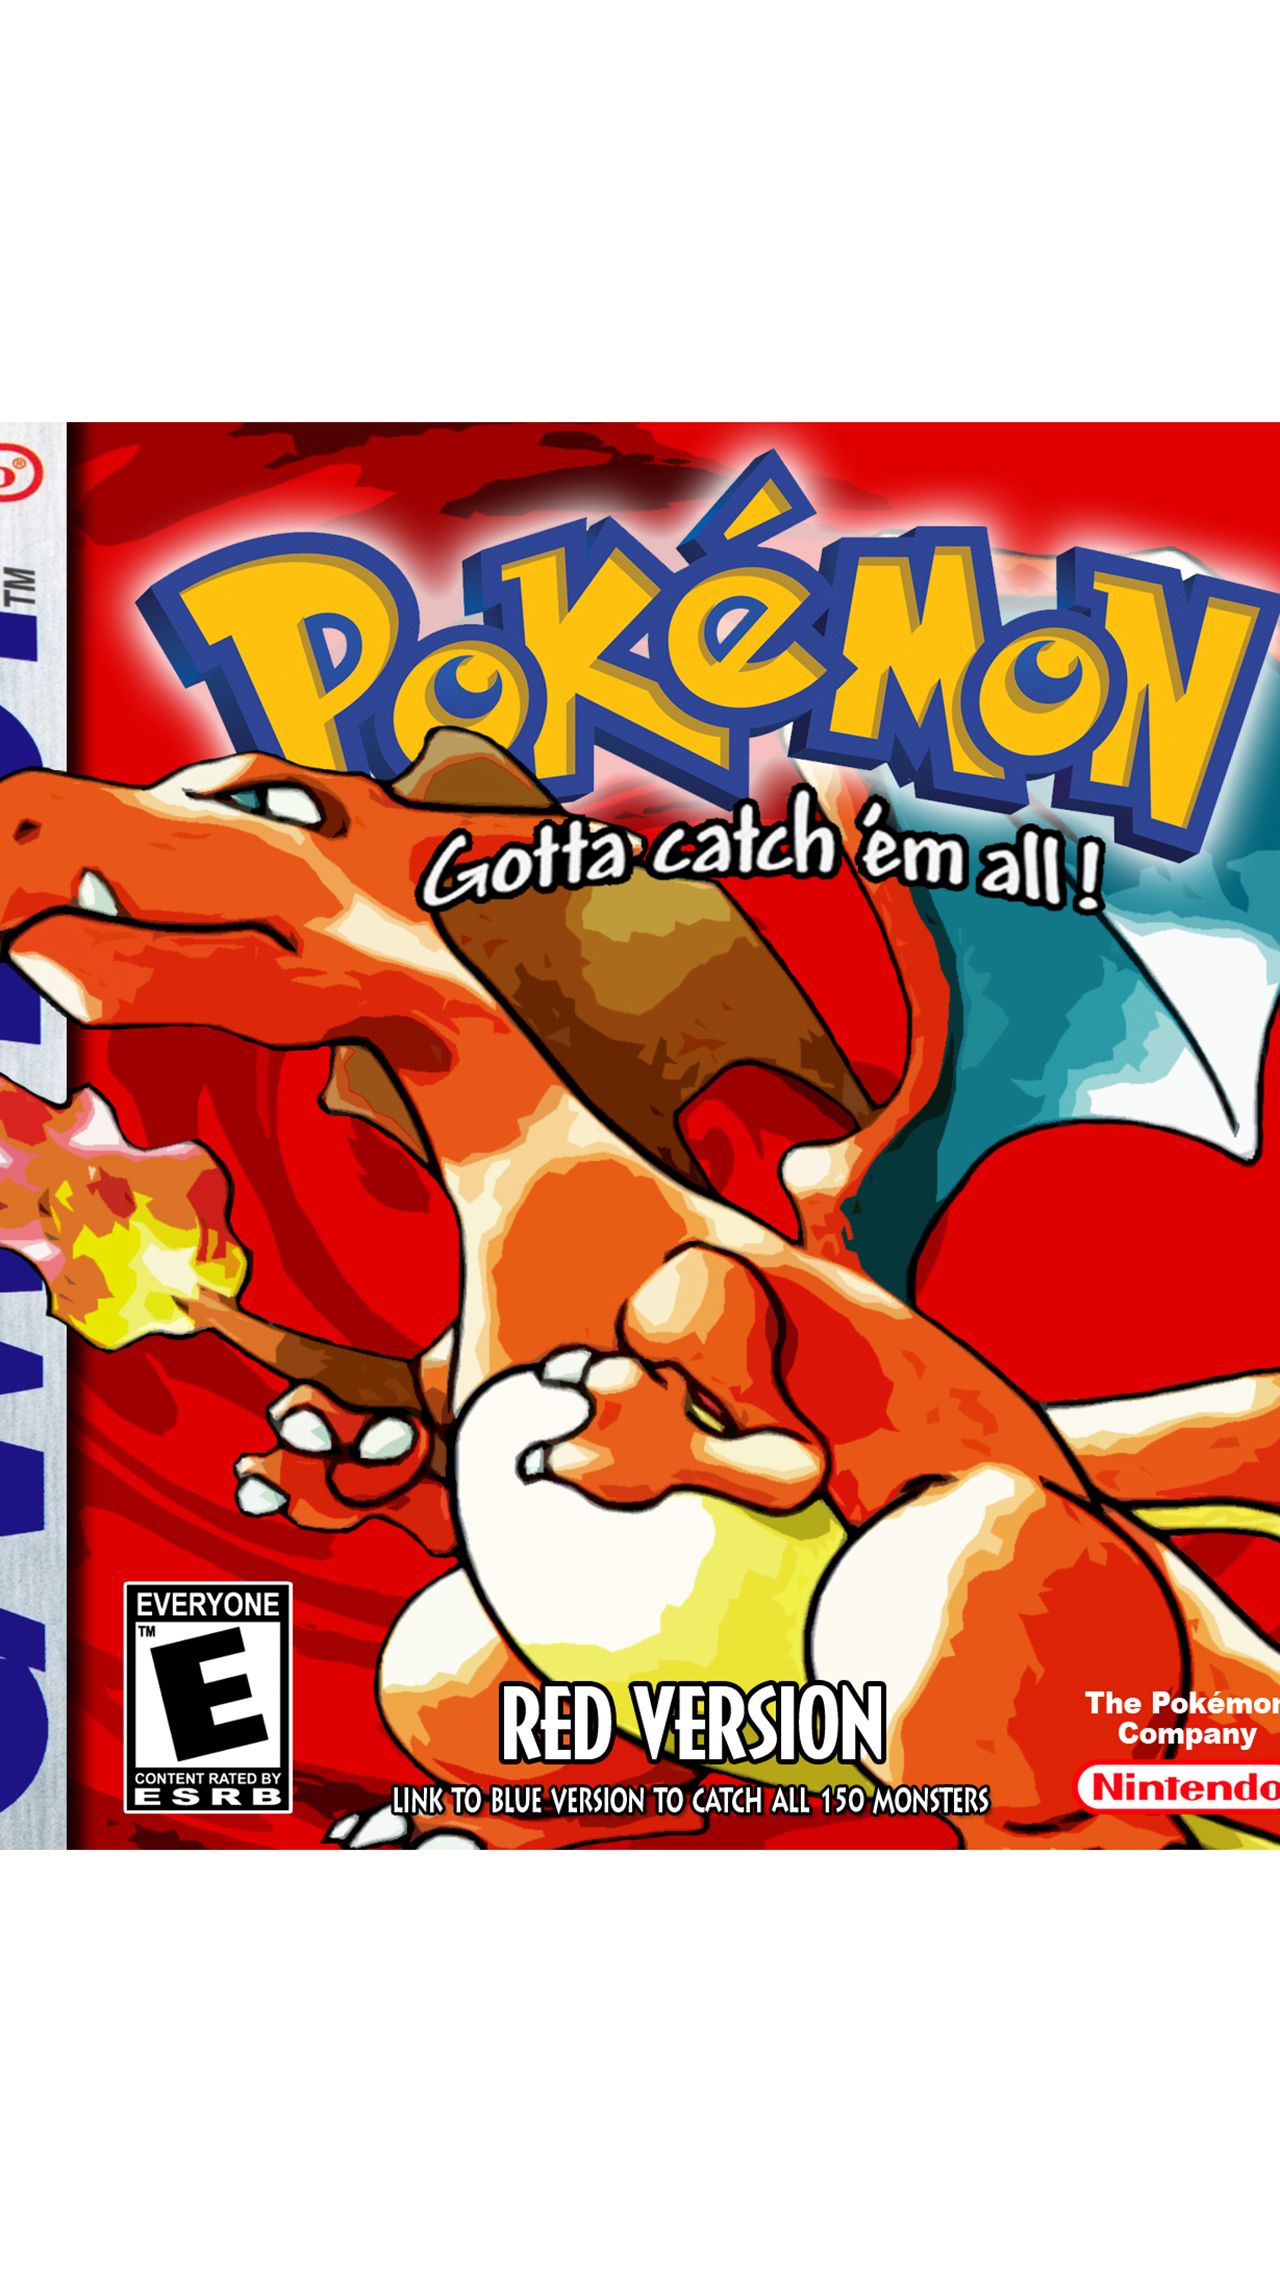 Pokémon (First Generation): 45-47 млн копий